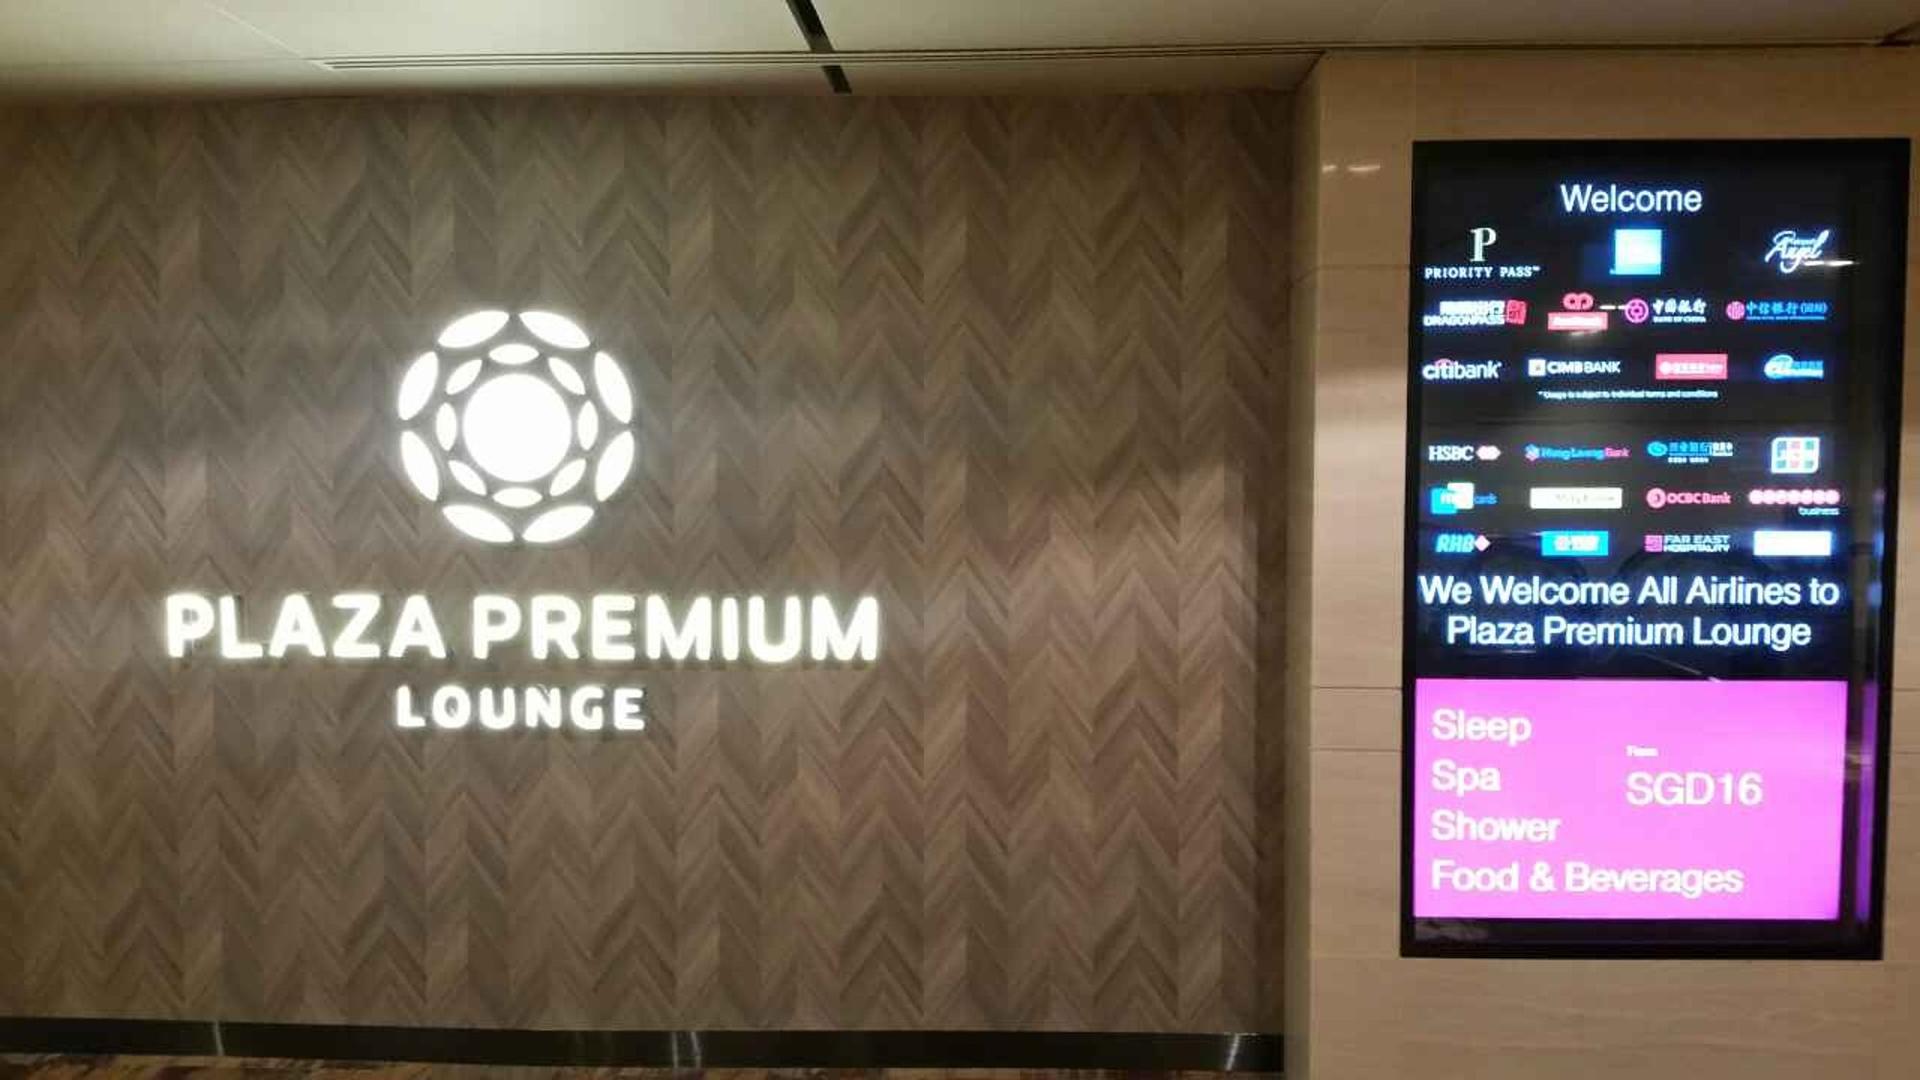 Plaza Premium Lounge image 21 of 45